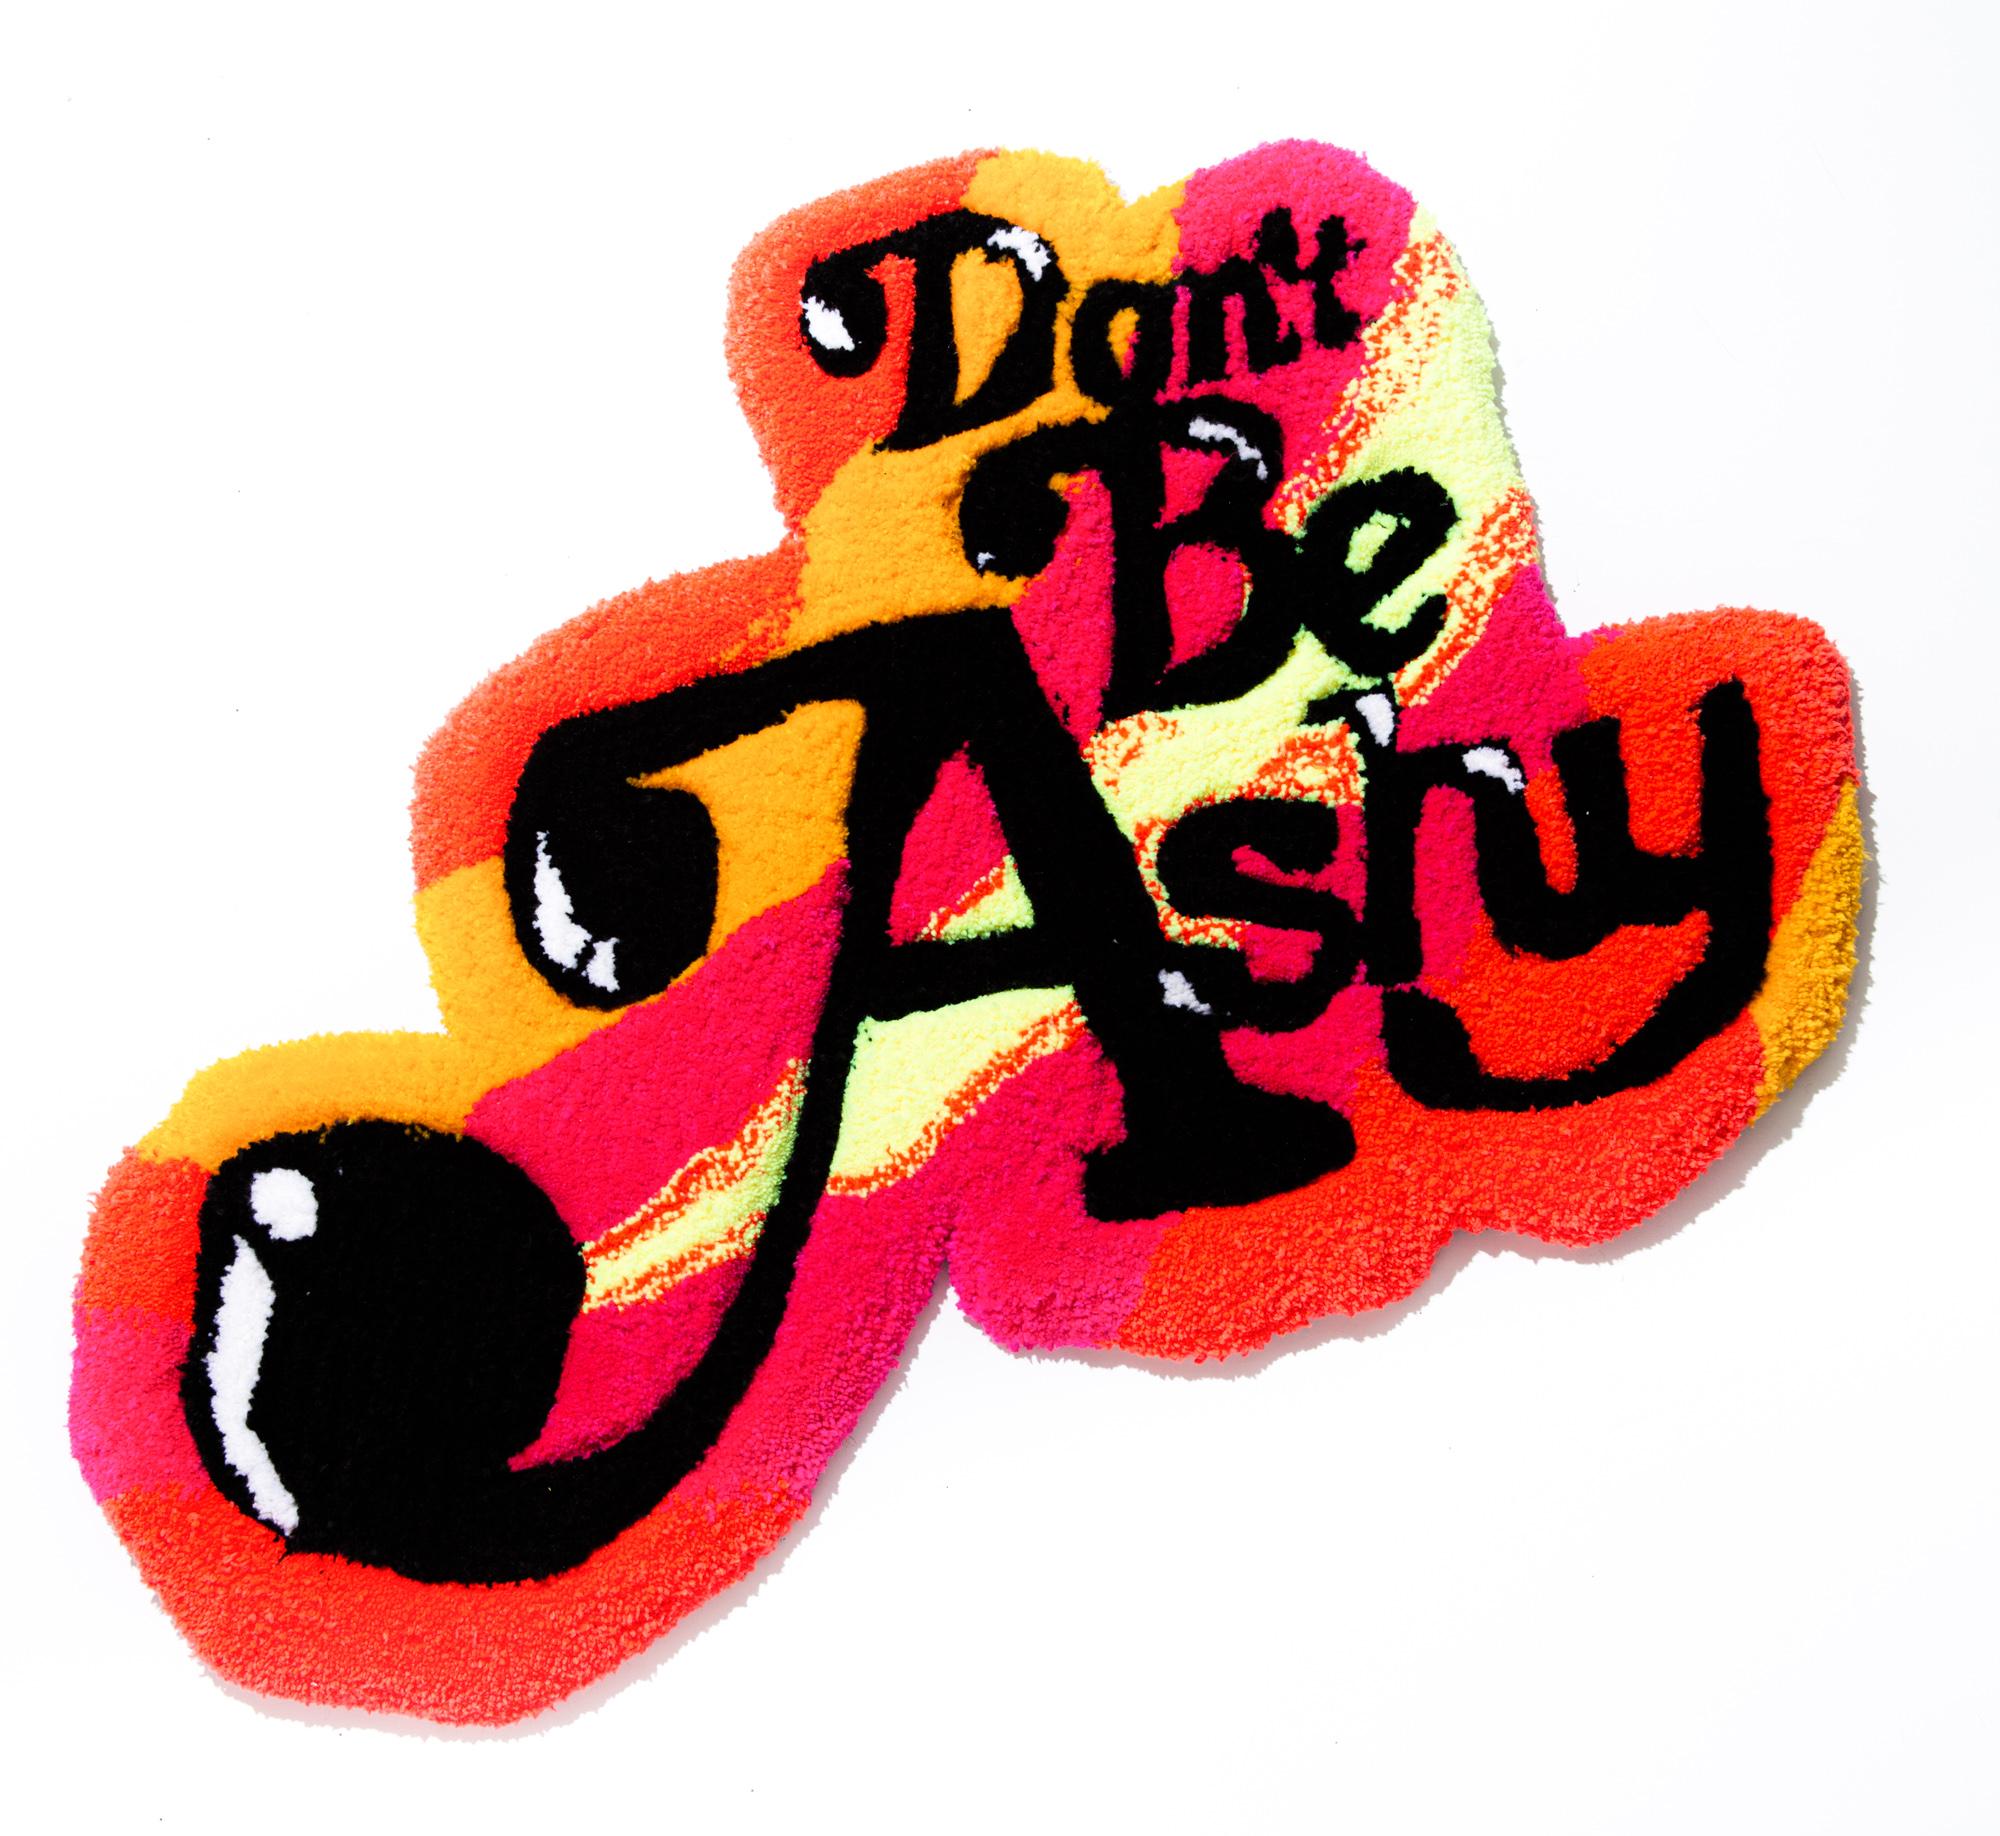 DON’T BE ASHY   - Mixed Media Art by Mz. Icar